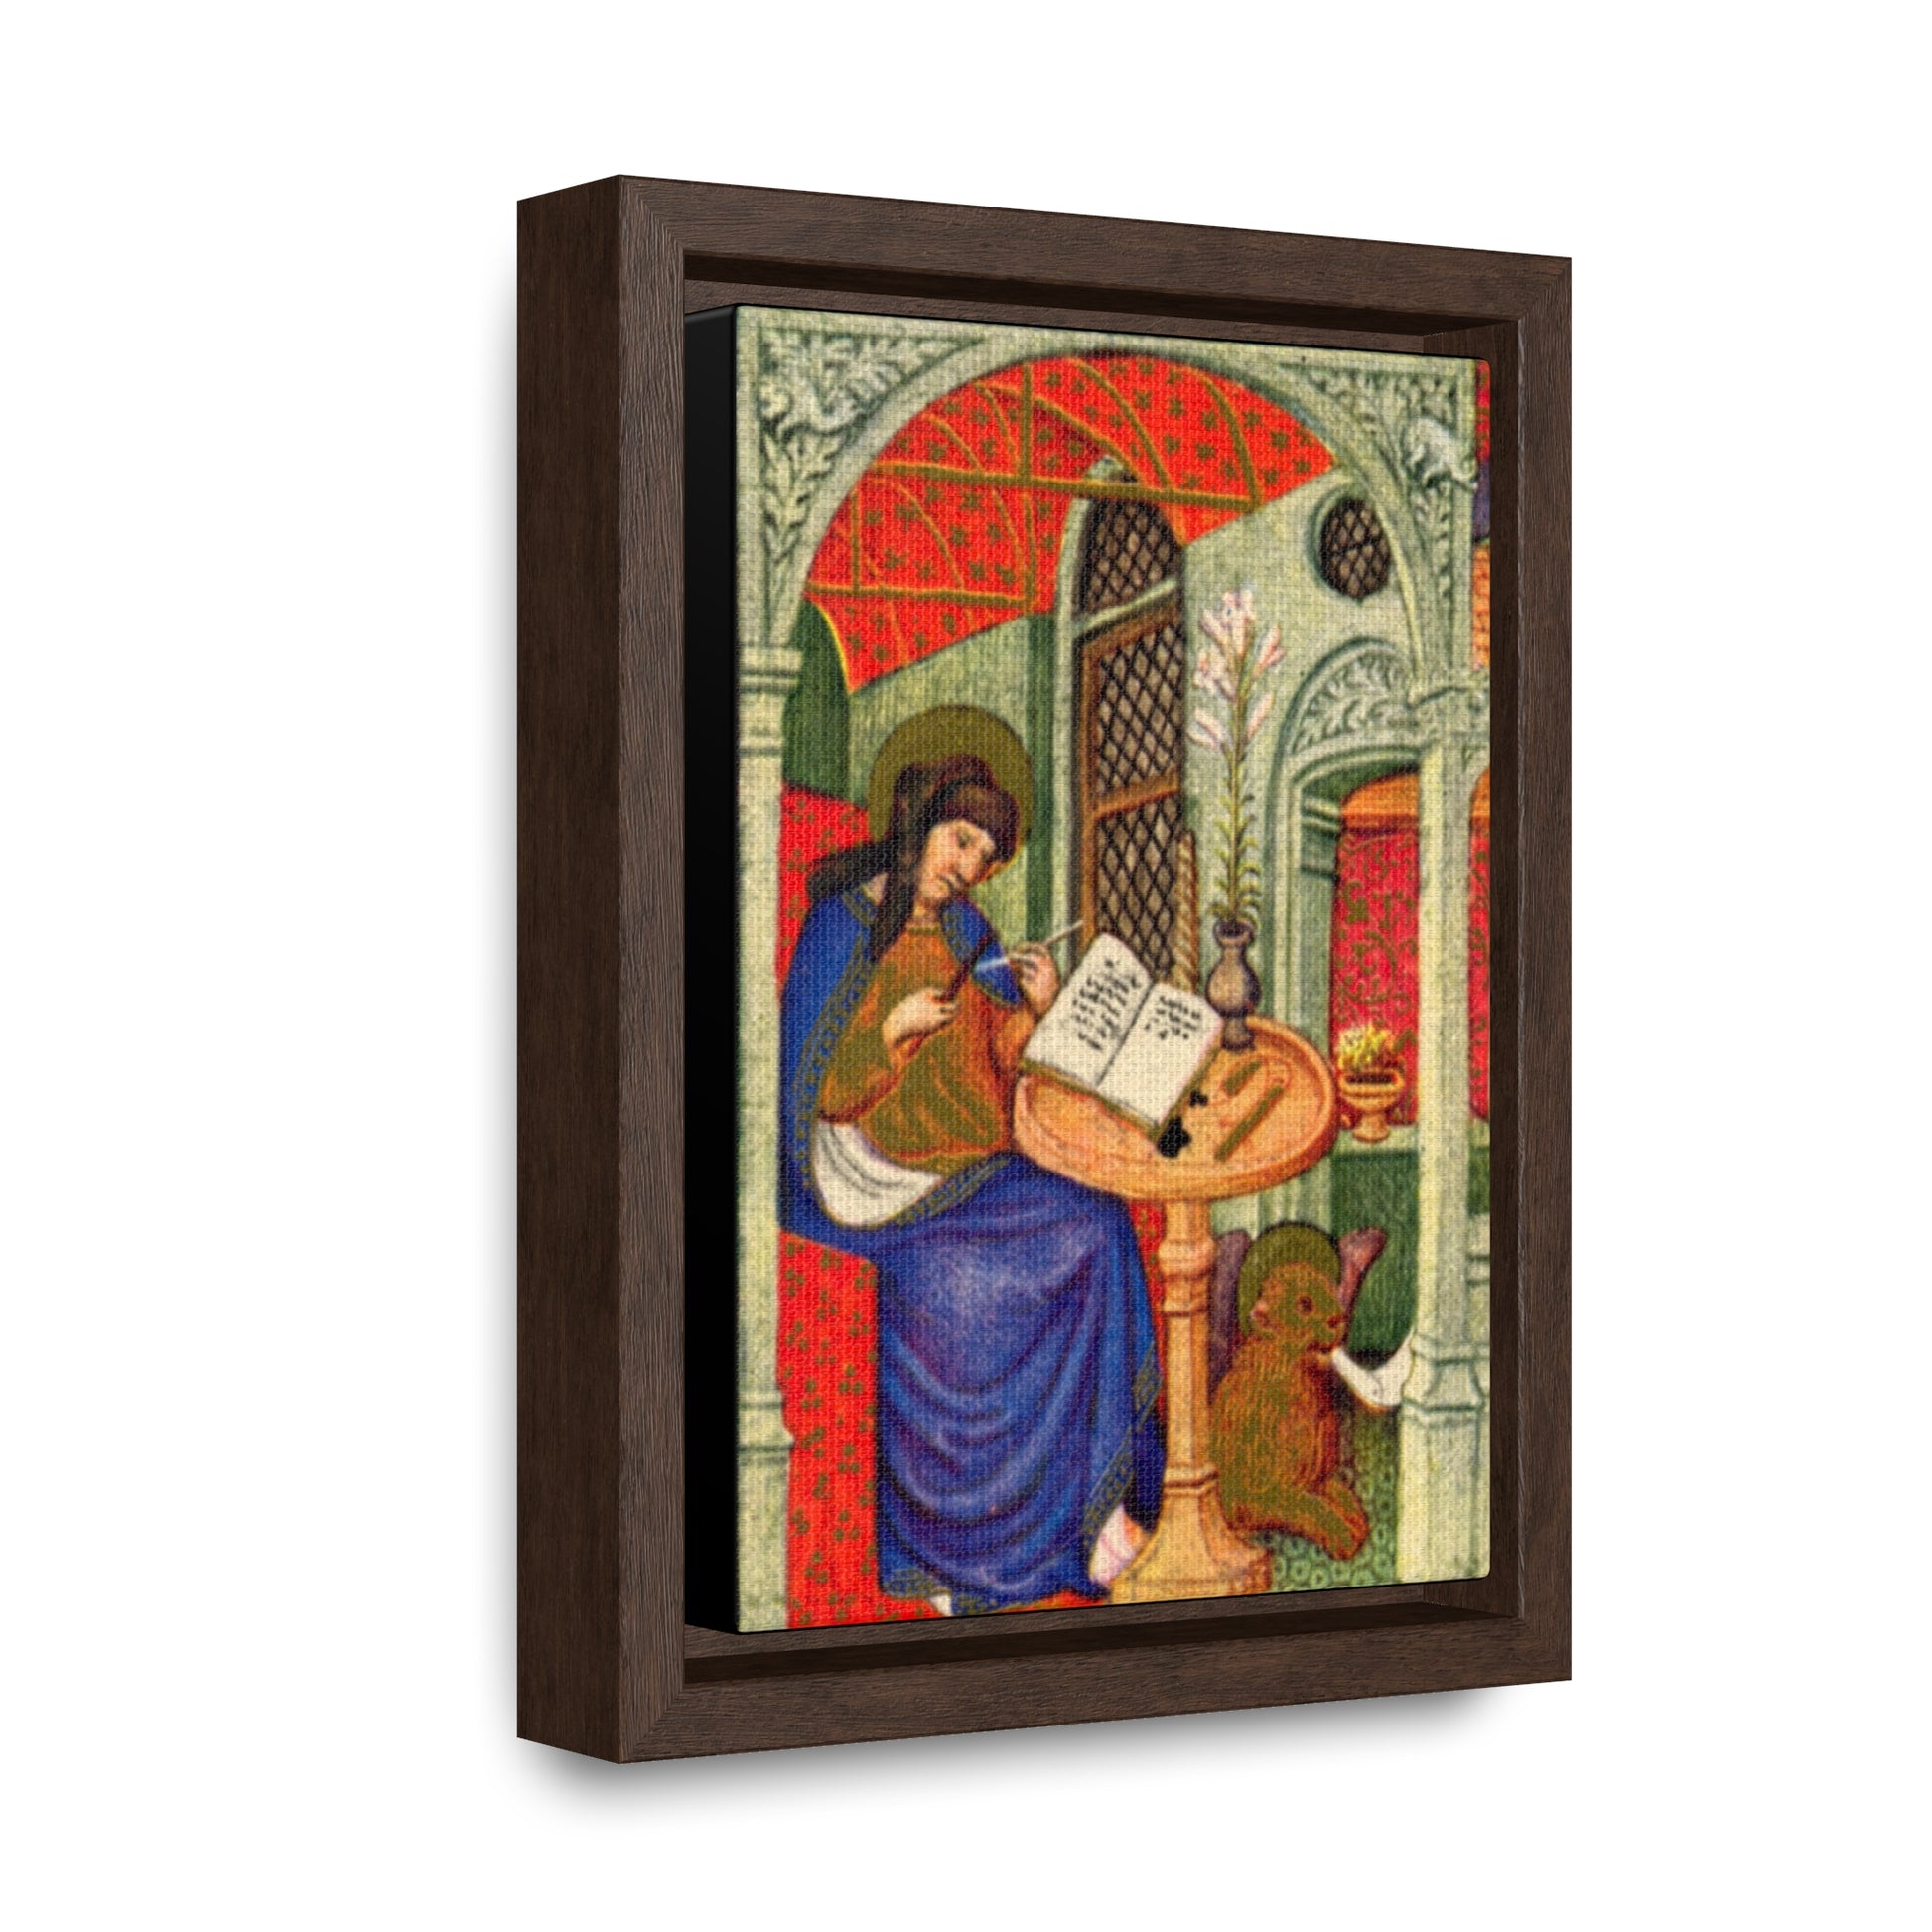 St Mark 15th Century, Framed, Gallery Canvas Wrap, 5"x7" - Studio Lams Creative Collective